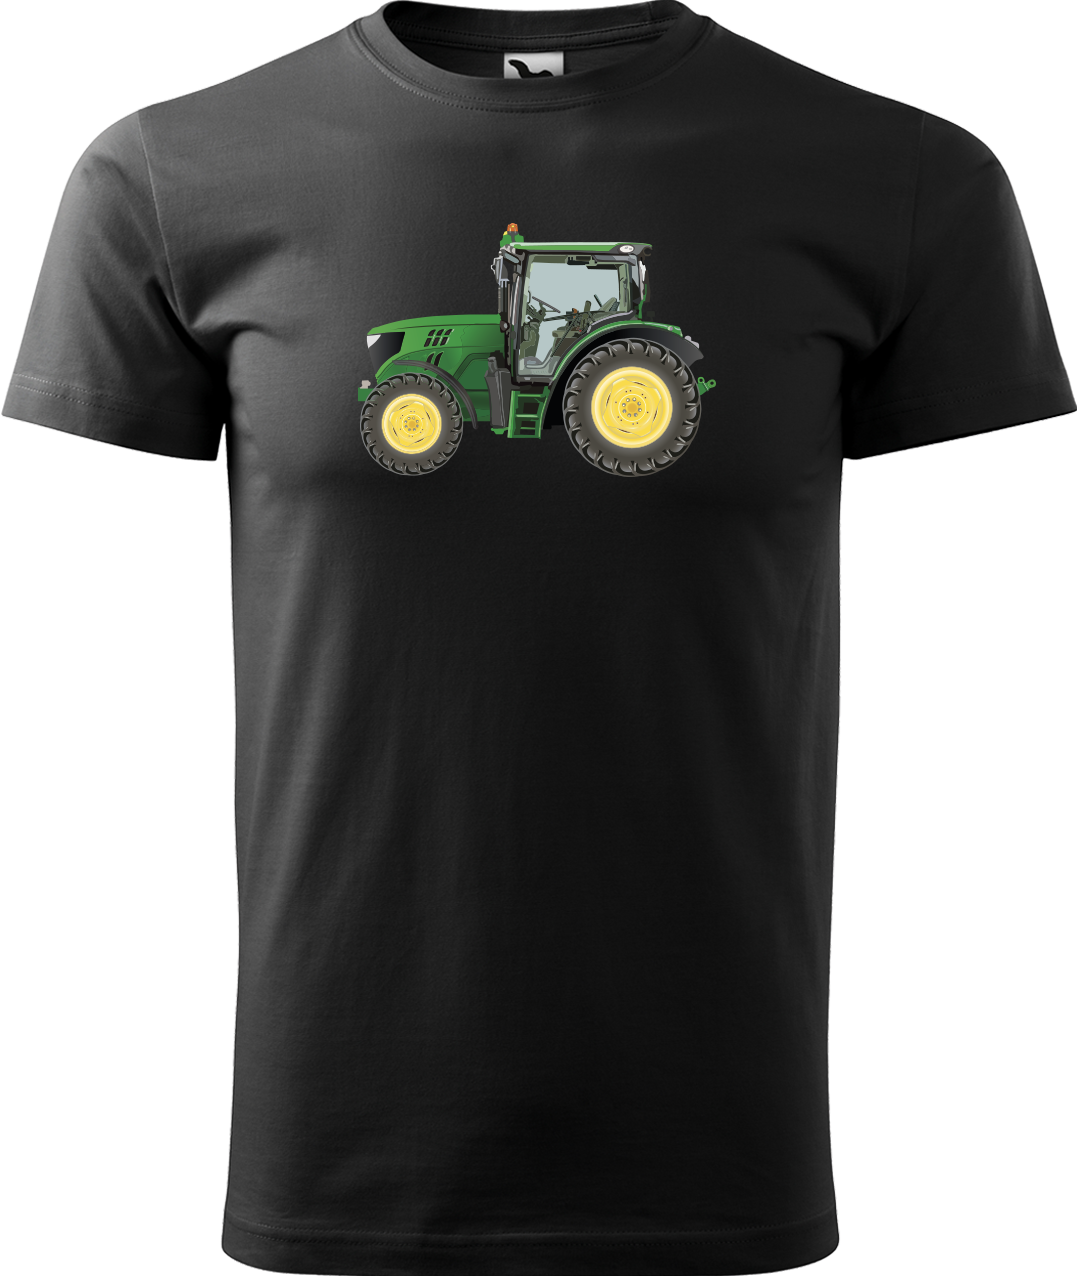 Tričko s traktorem - Zelený traktor Velikost: 4XL, Barva: Černá (01)